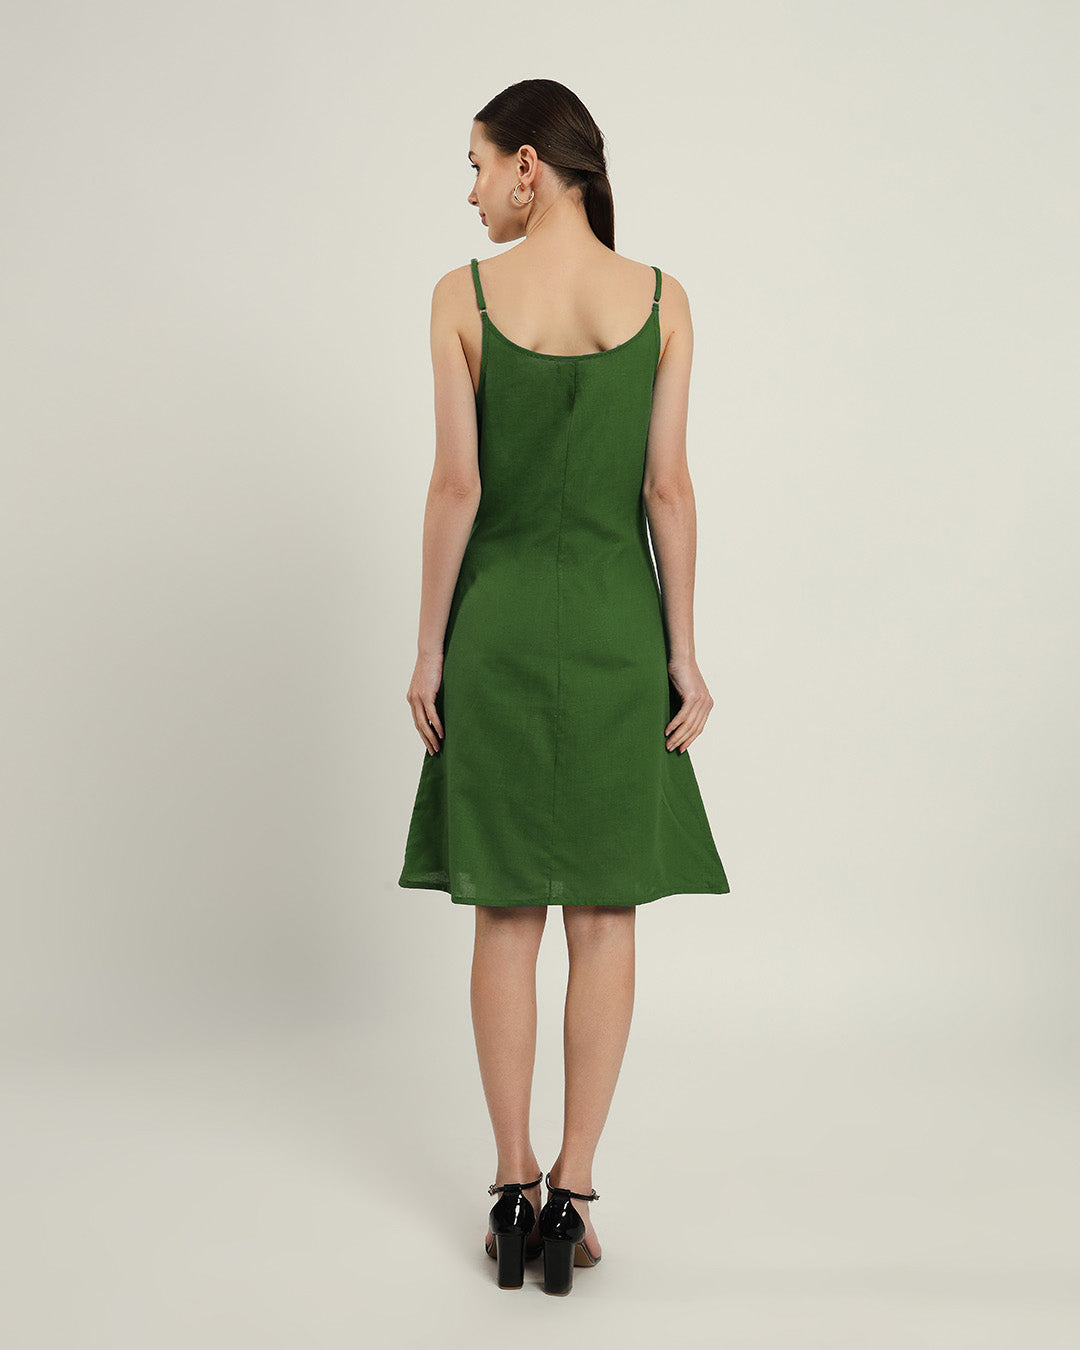 The Chambéry Emerald Dress